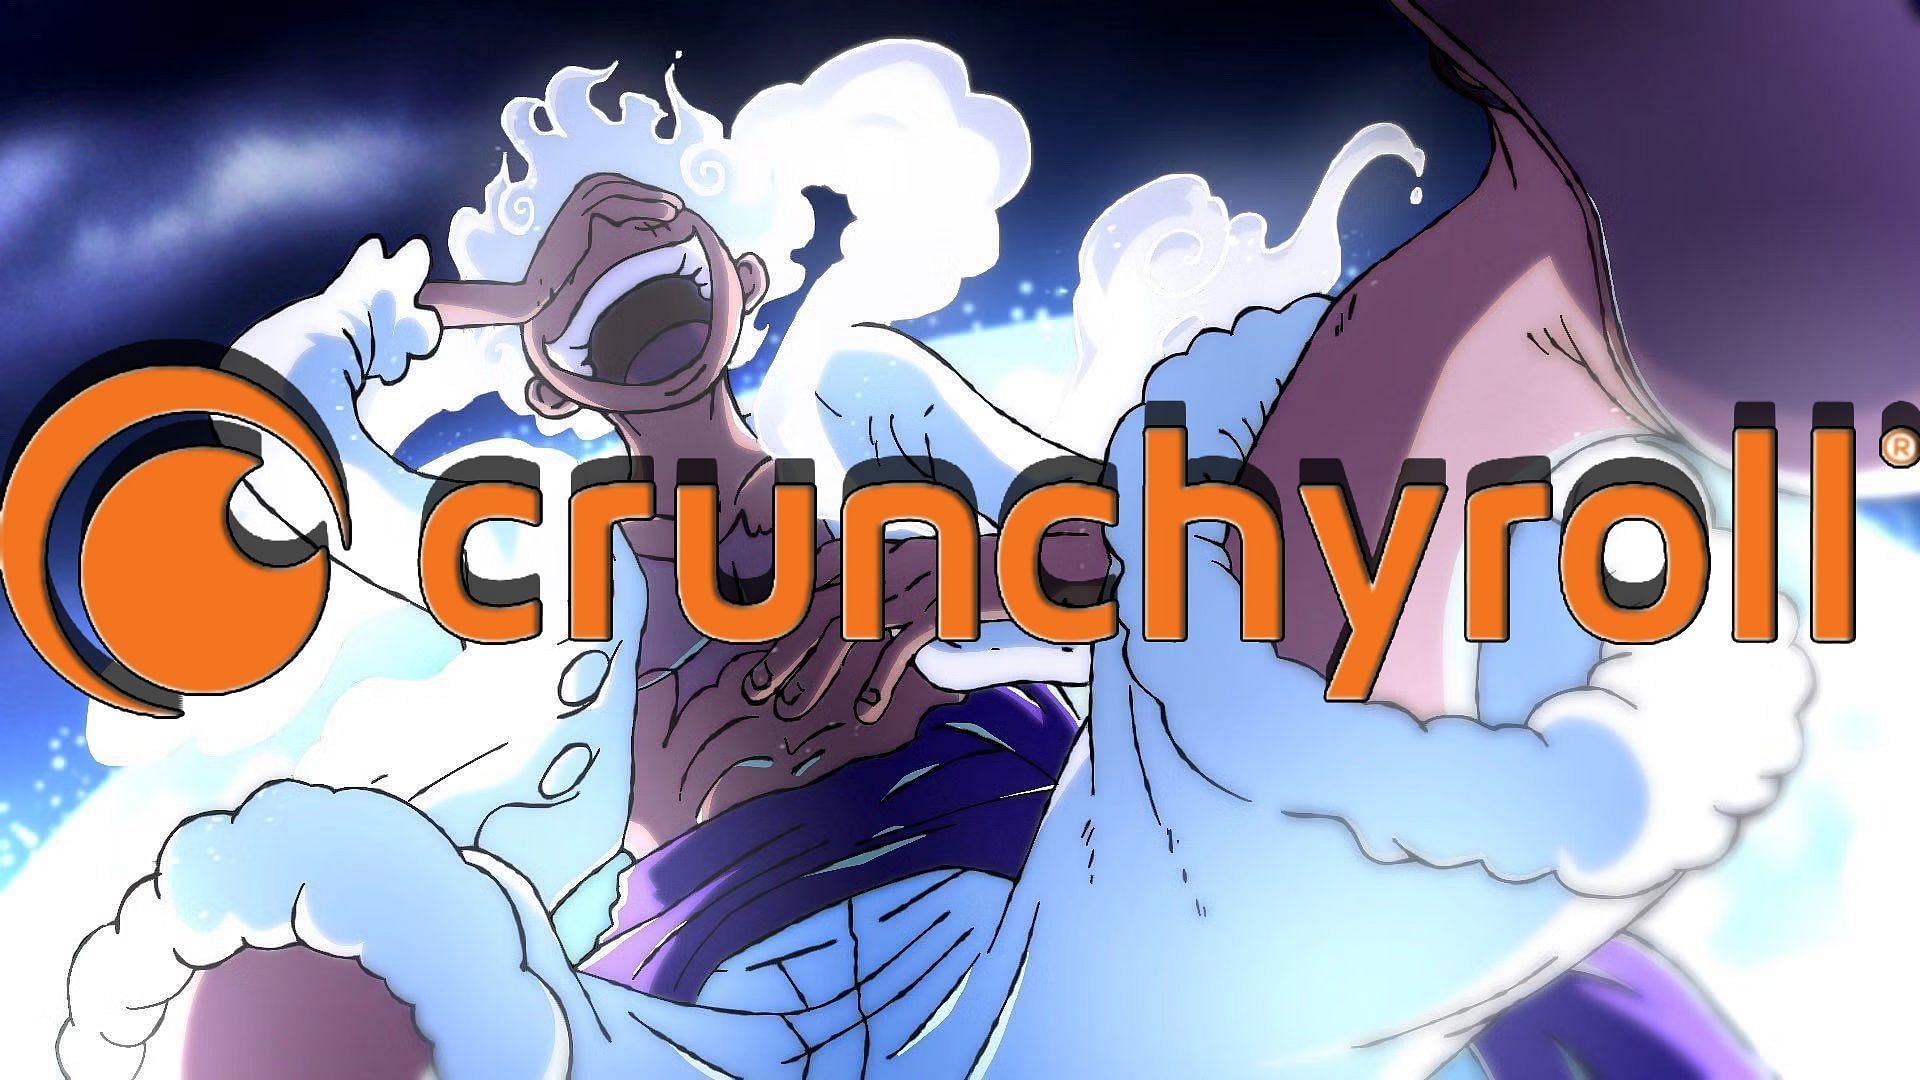 Crunchyroll logo with Gear 5 Luffy from One Piece episode 1071